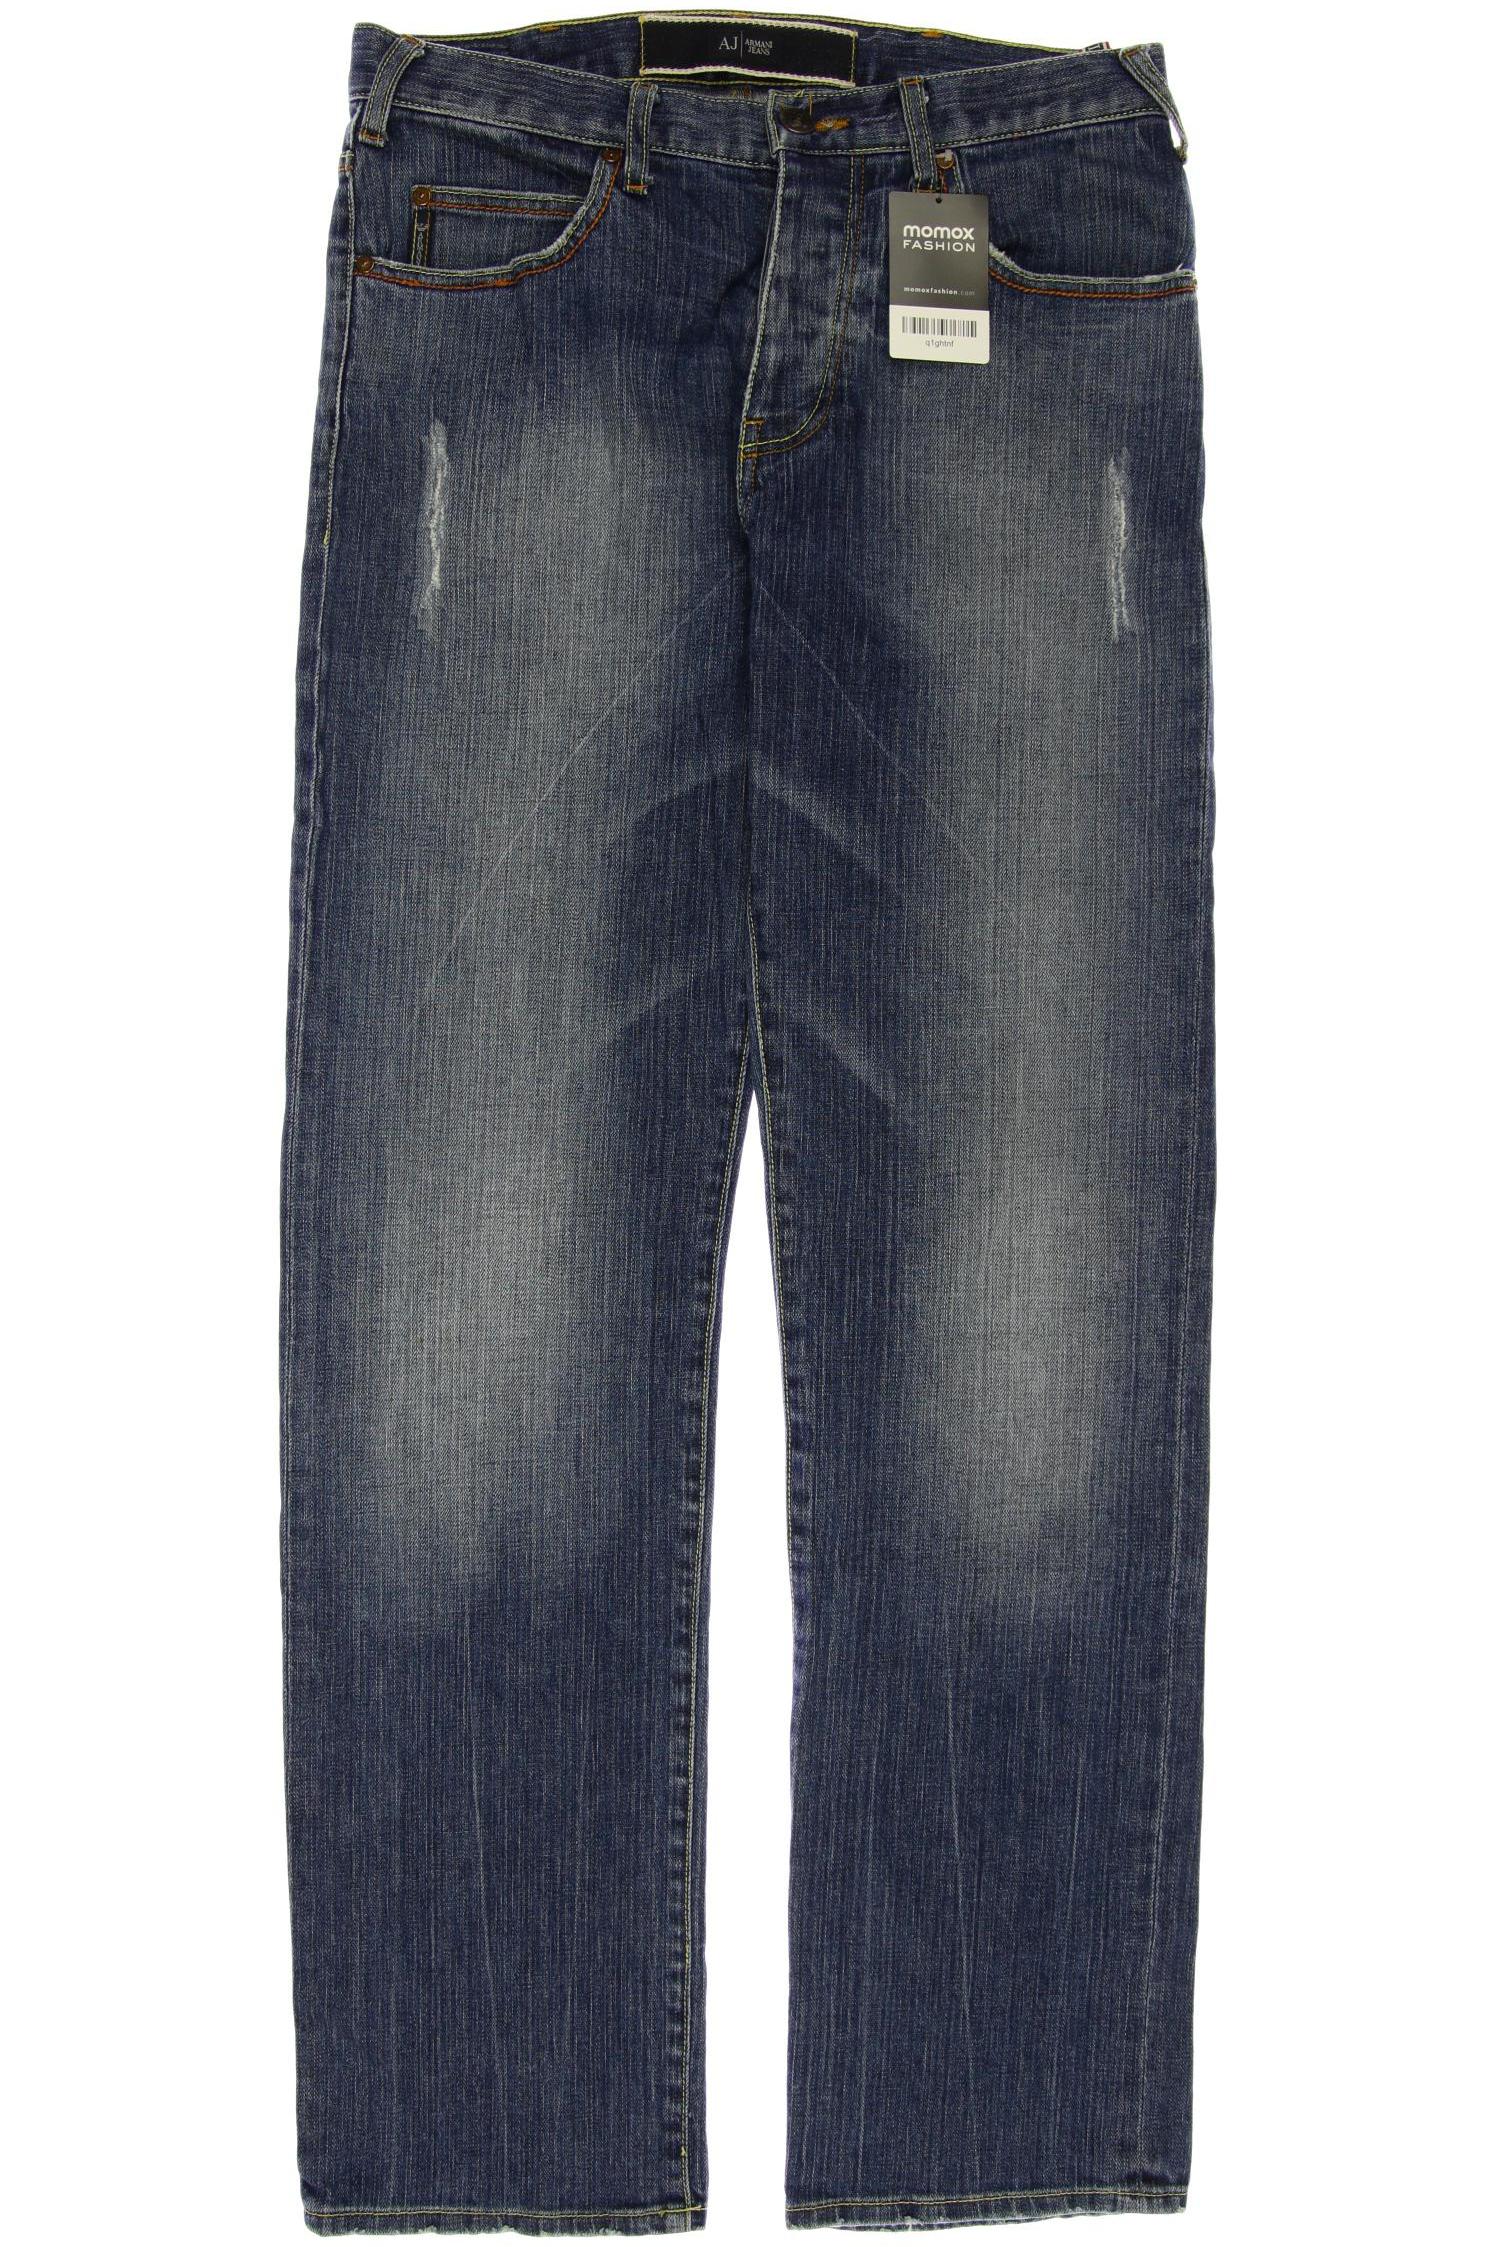 Armani Jeans Herren Jeans, blau von Armani Jeans